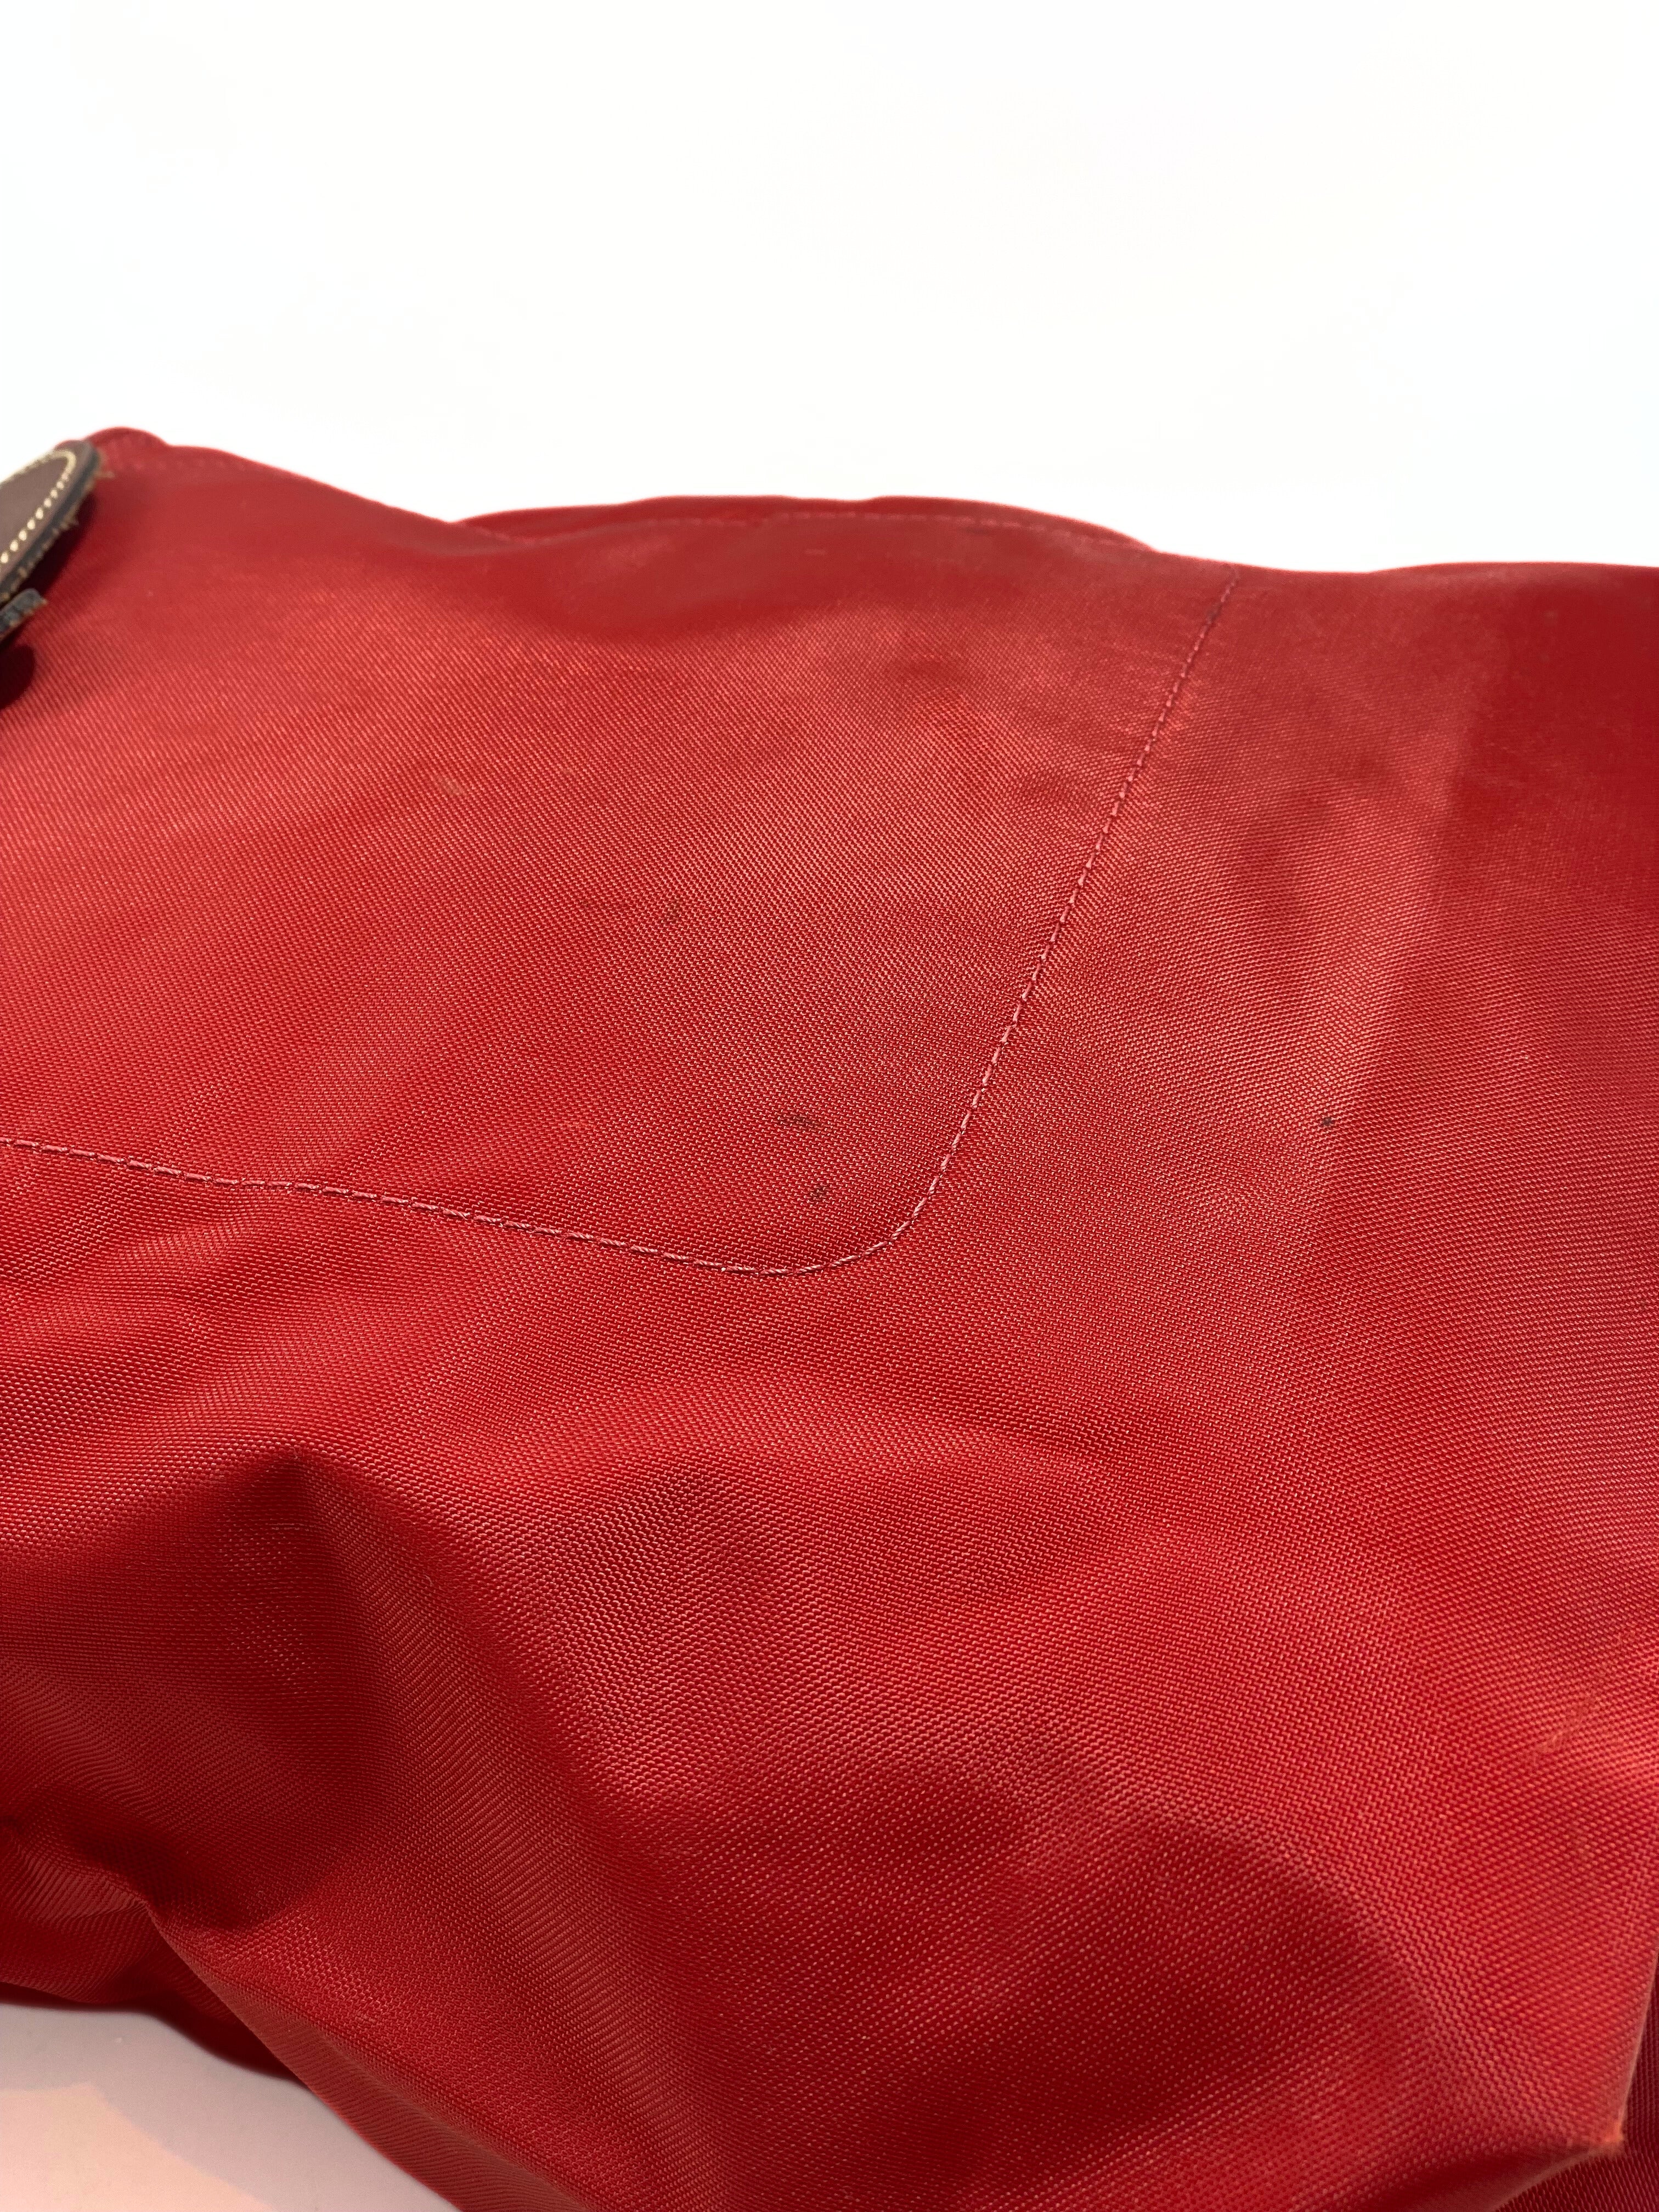 Mochila Longchamp Le Pliage Roja